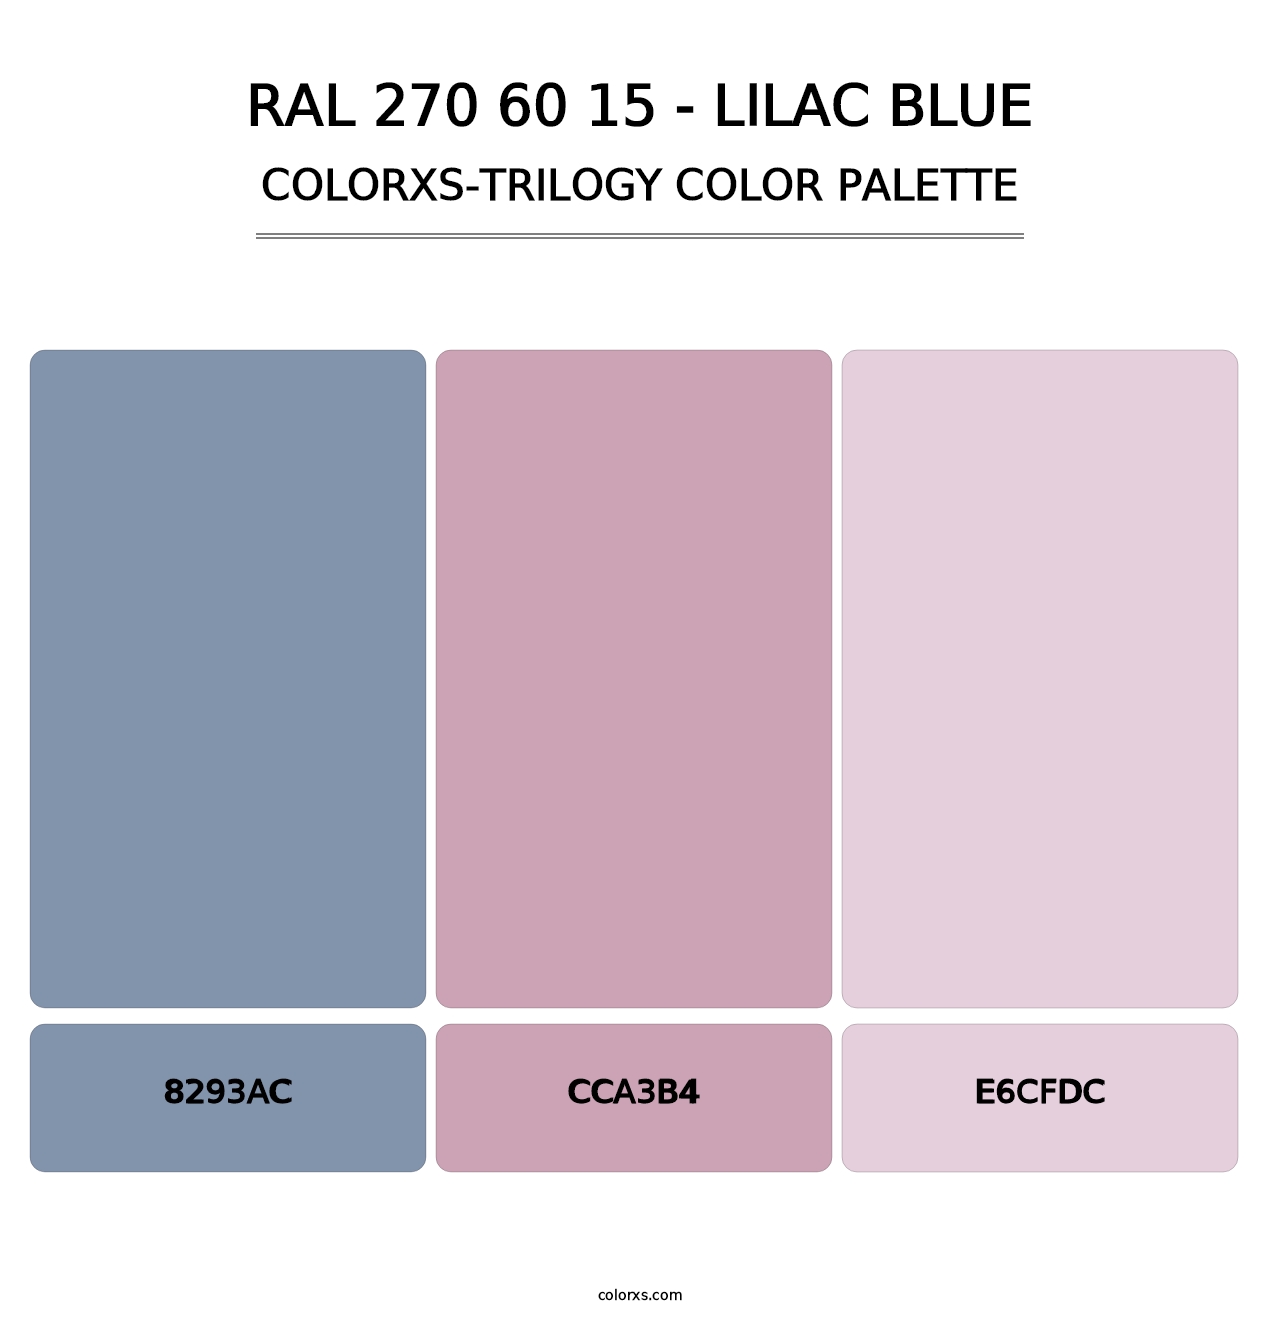 RAL 270 60 15 - Lilac Blue - Colorxs Trilogy Palette